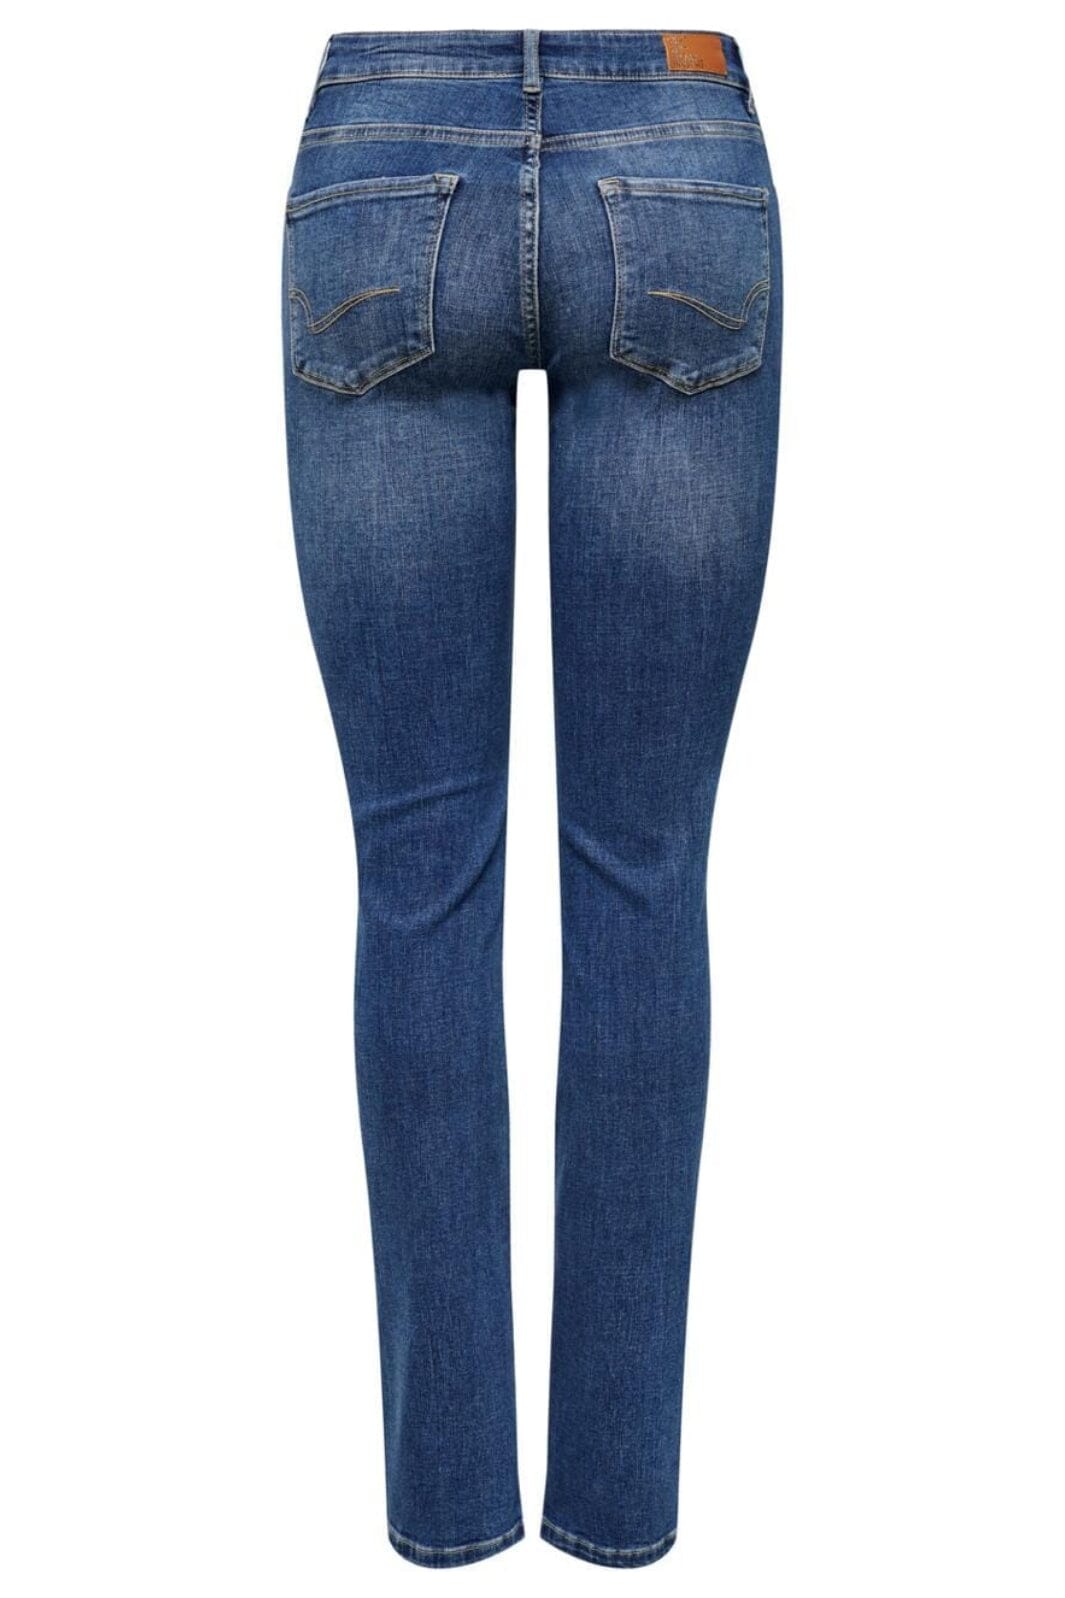 Only - Onlalicia Reg Strt Dot879 - 3830281 Medium Blue Denim Jeans 